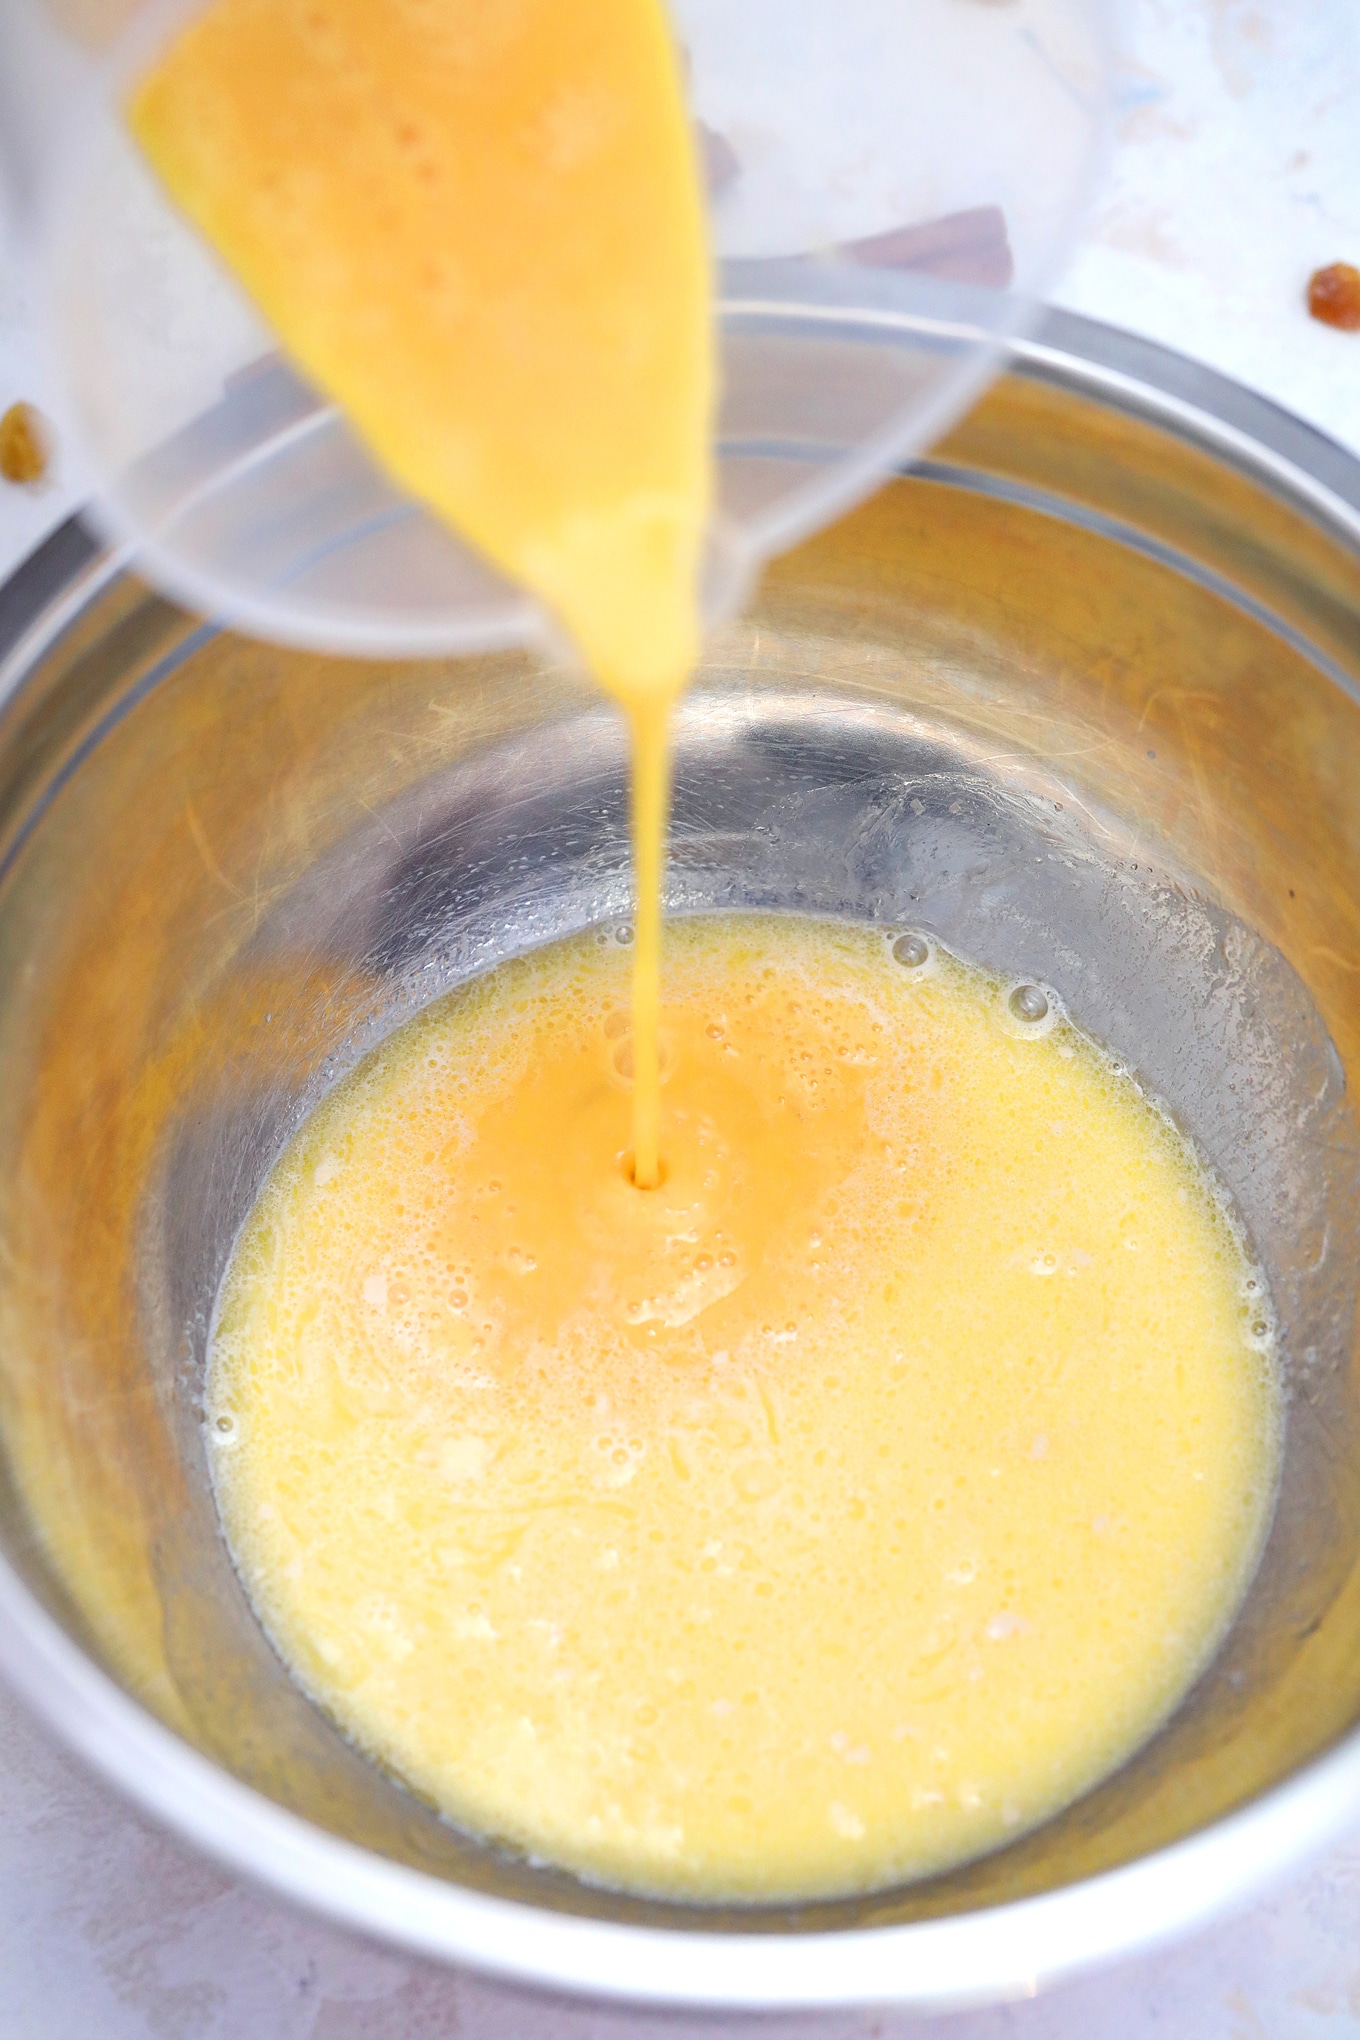 Adding eggs into yeast mixture